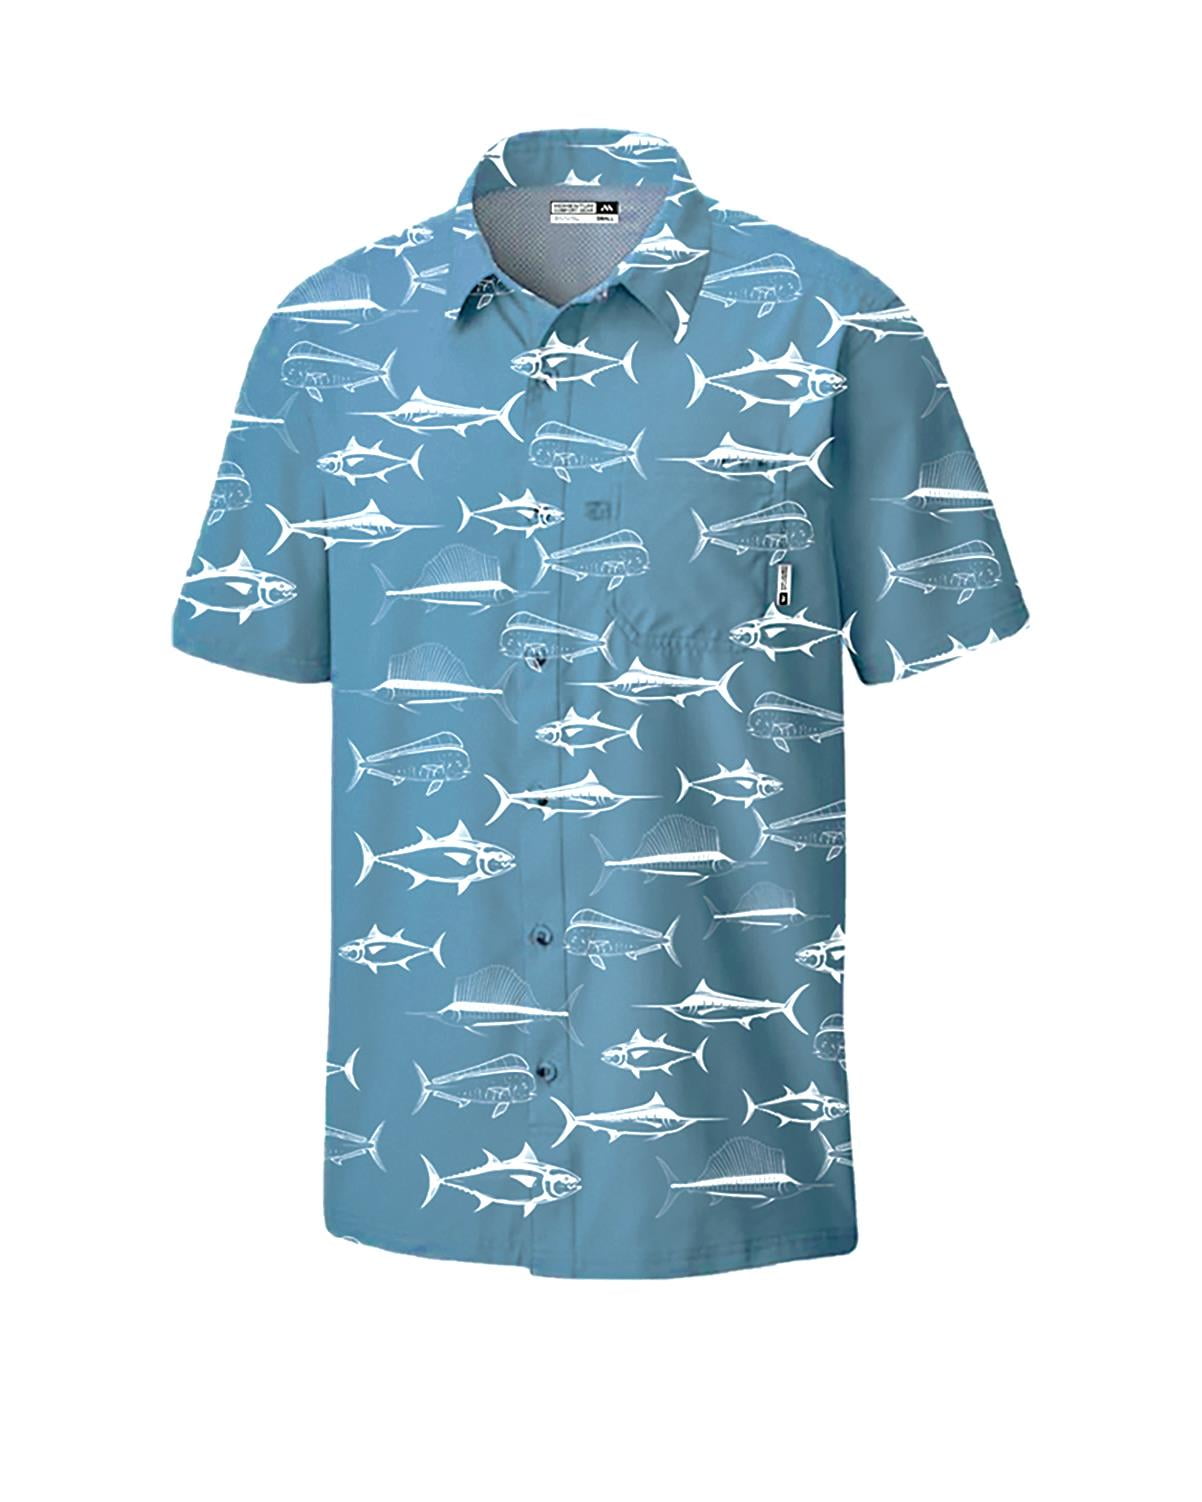 Mens Performance Short Sleeve Button Up Quick Dry Shirt 50+ UPF Fishing  Shirt, Slate Game Fish, Size: XL, Momentum Comfort Gear 